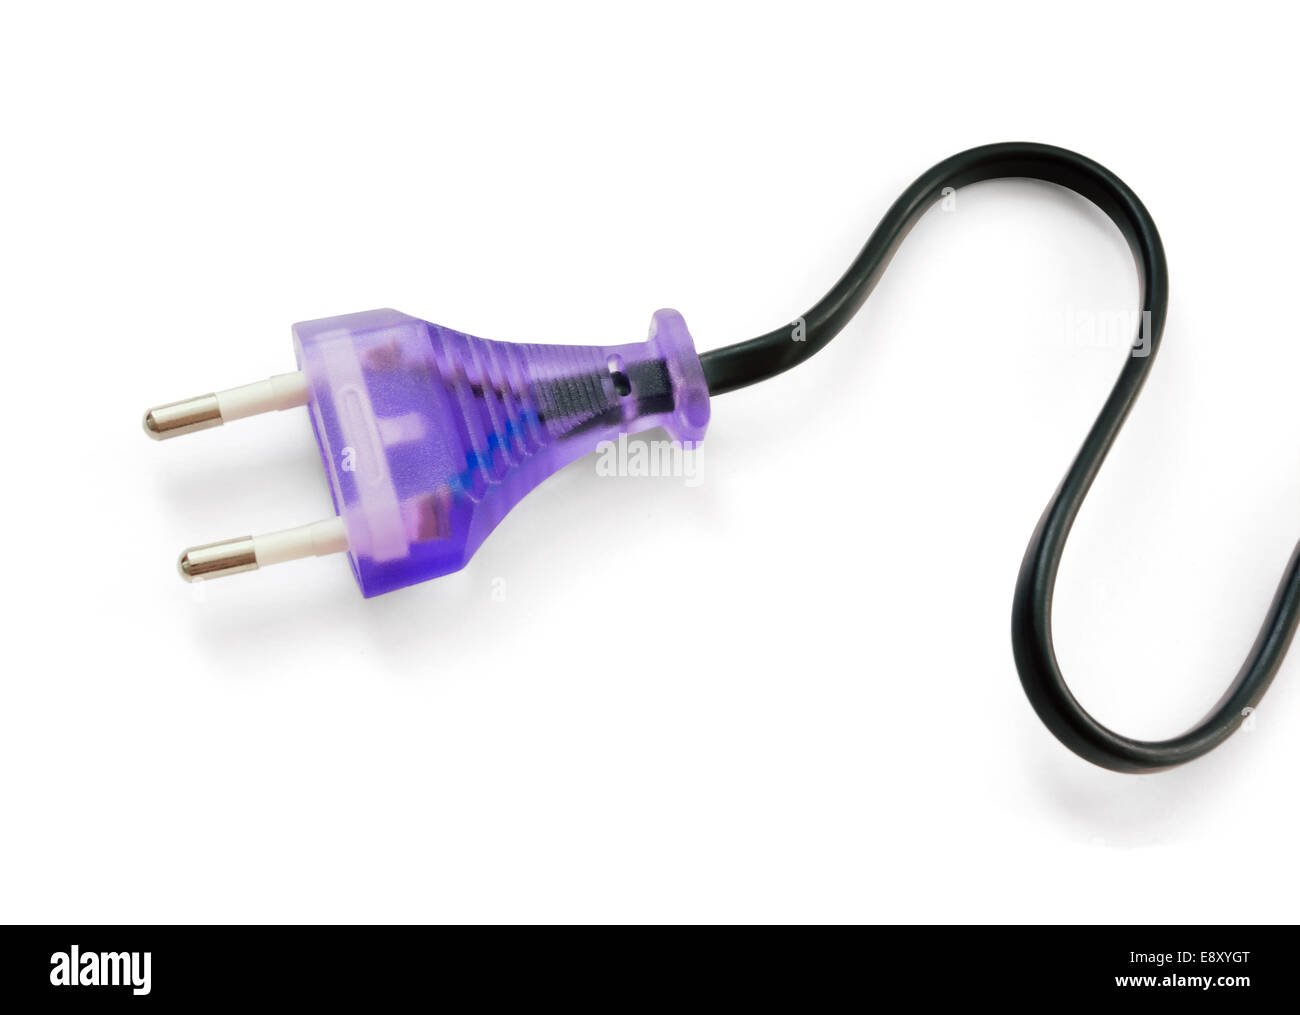 Enchufe eléctrico violeta Foto de stock